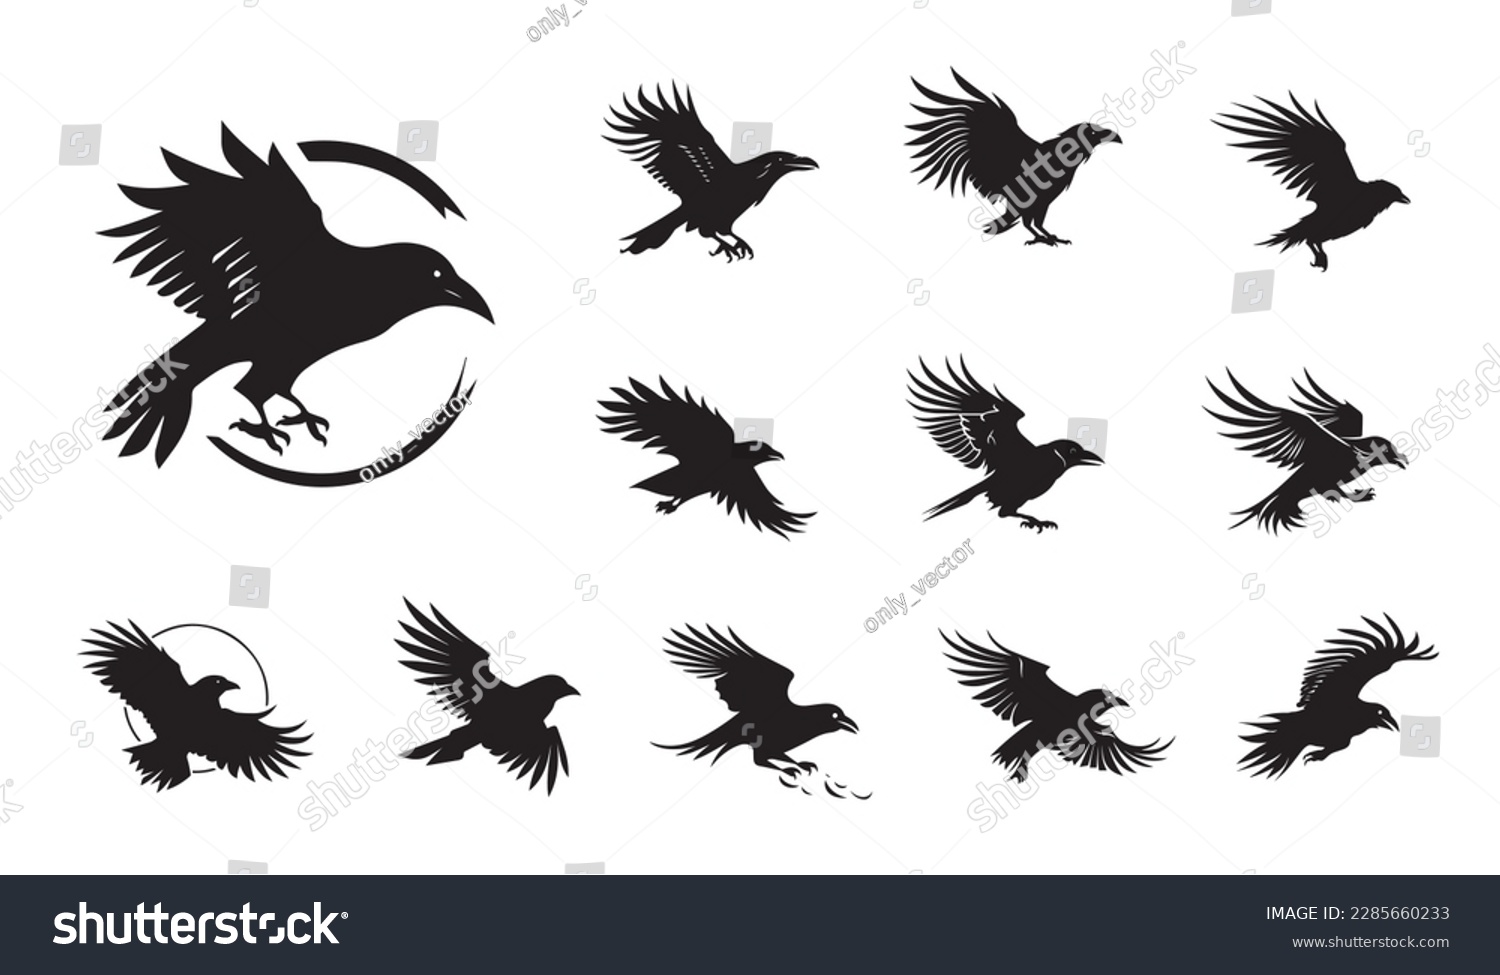 SVG of Crow, raven, bird vector illustration on a white background. Vector illustration silhouette svg. svg